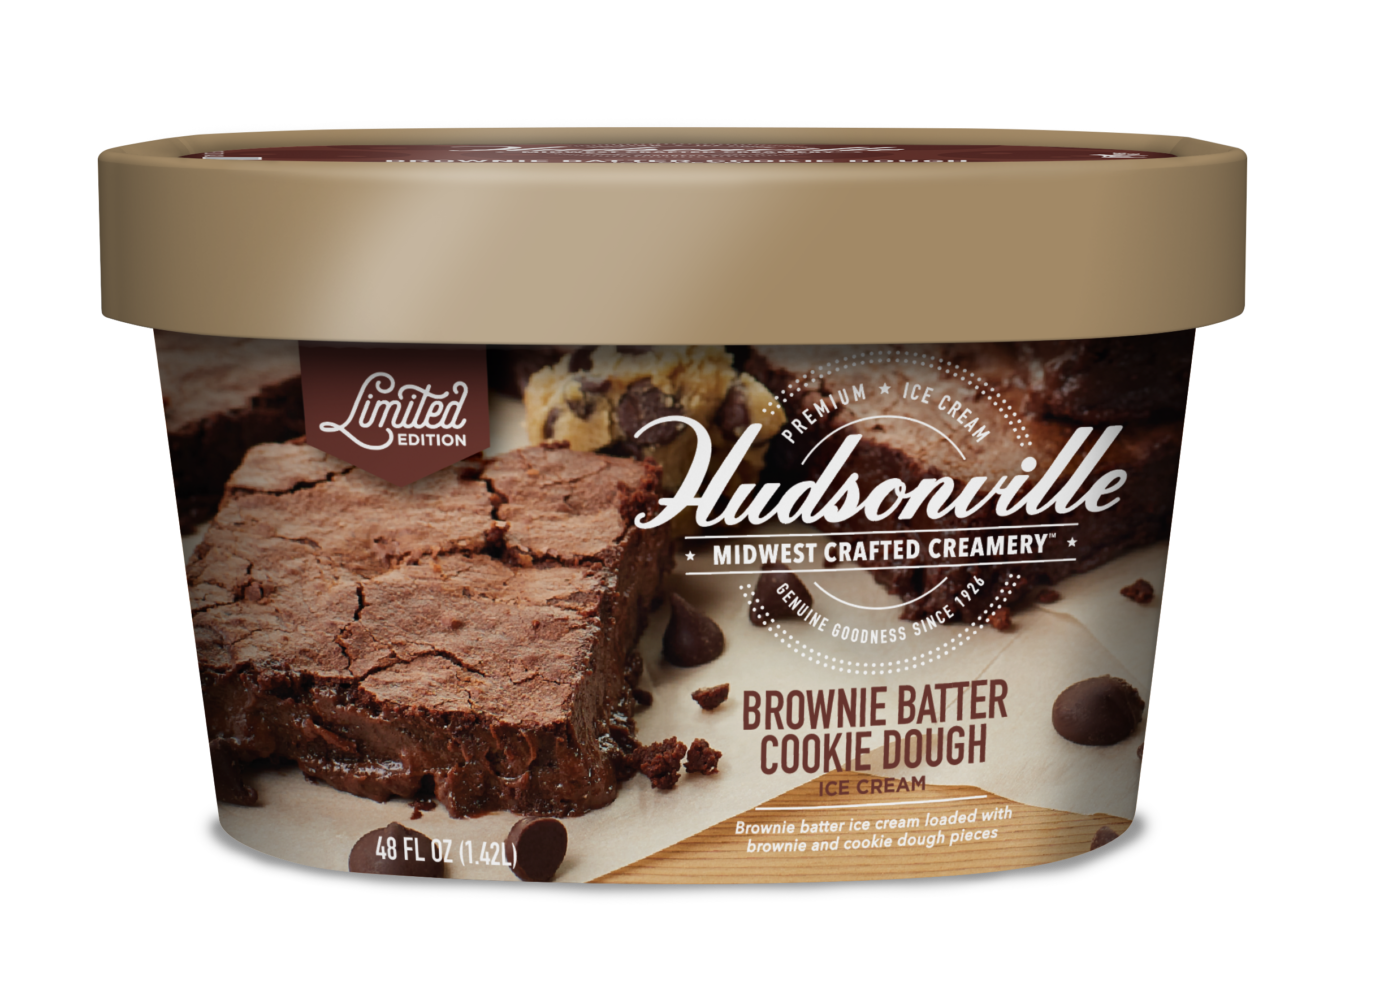 Hudsonville Ice Cream: Brownie Batter Cookie Dough